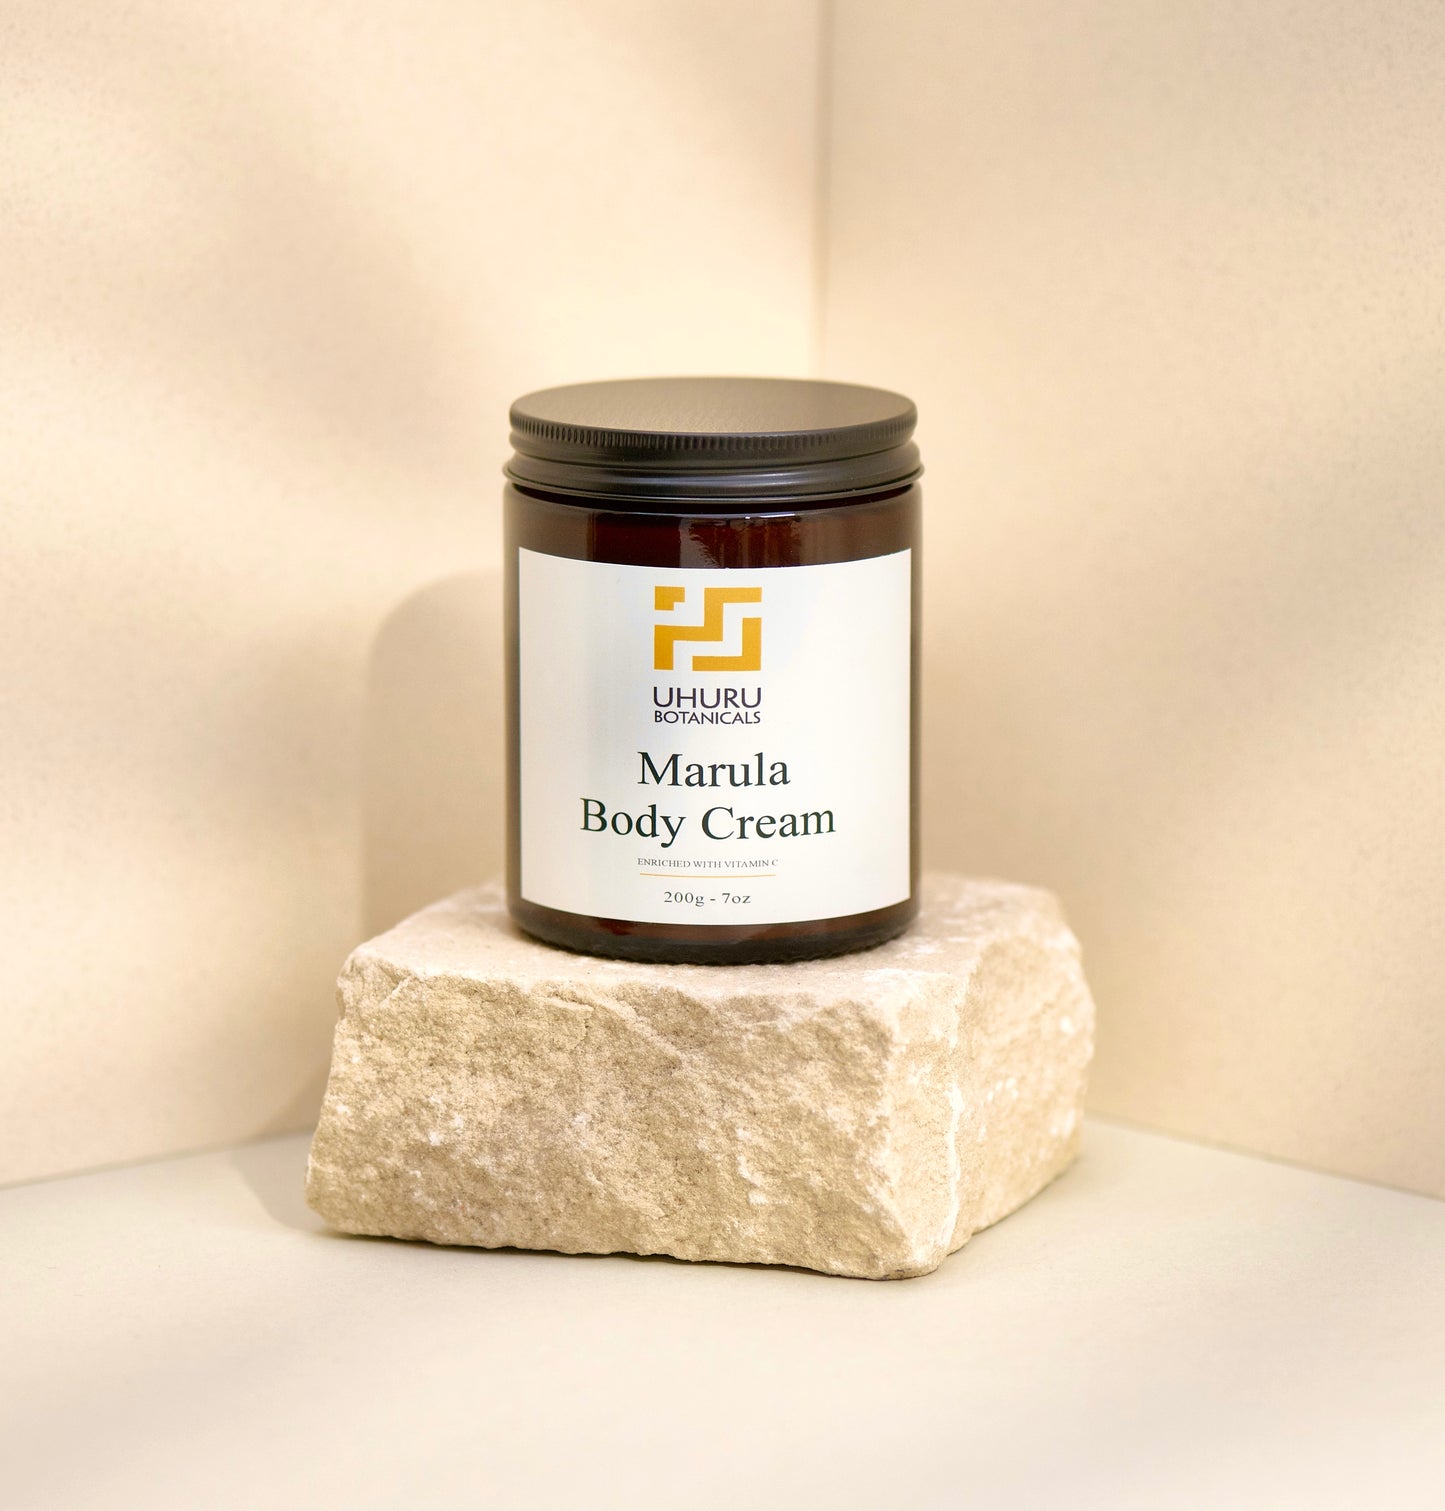 Marula Body Cream – Enriched with vitamin C